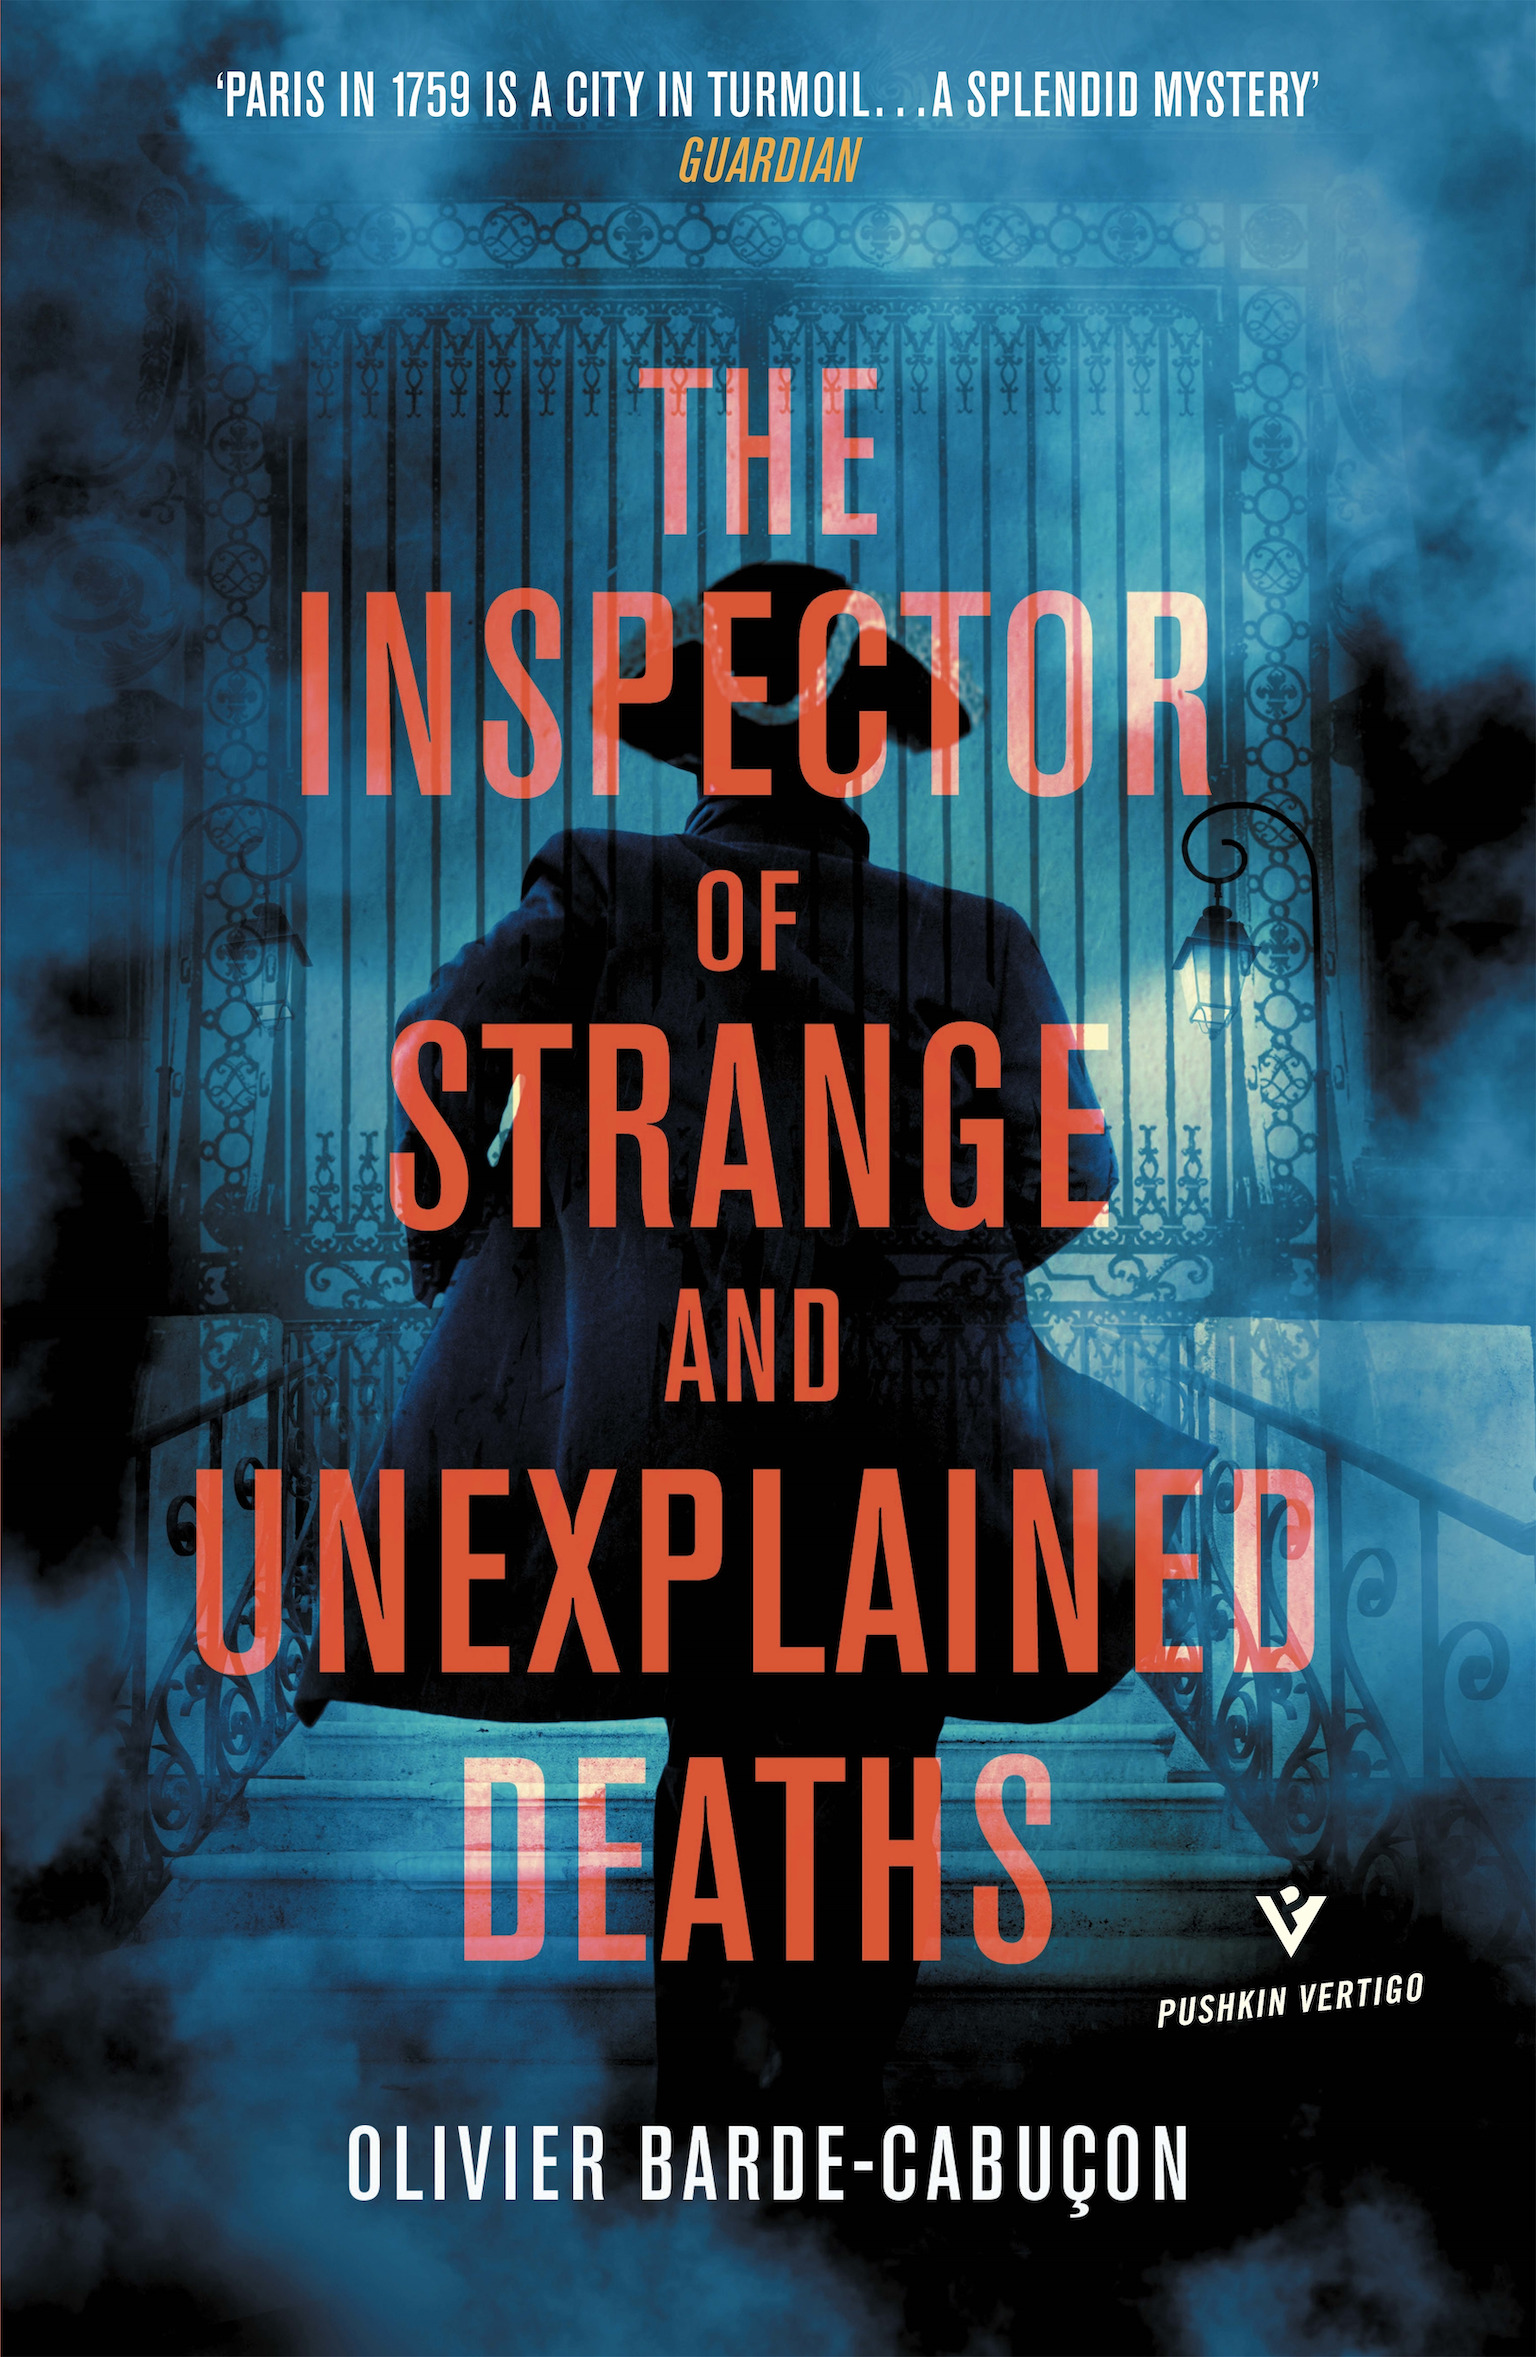 Pushkin Vertigo - The Inspector of Strange and Unexplained Deaths | Barde-Cabucon, Olivier